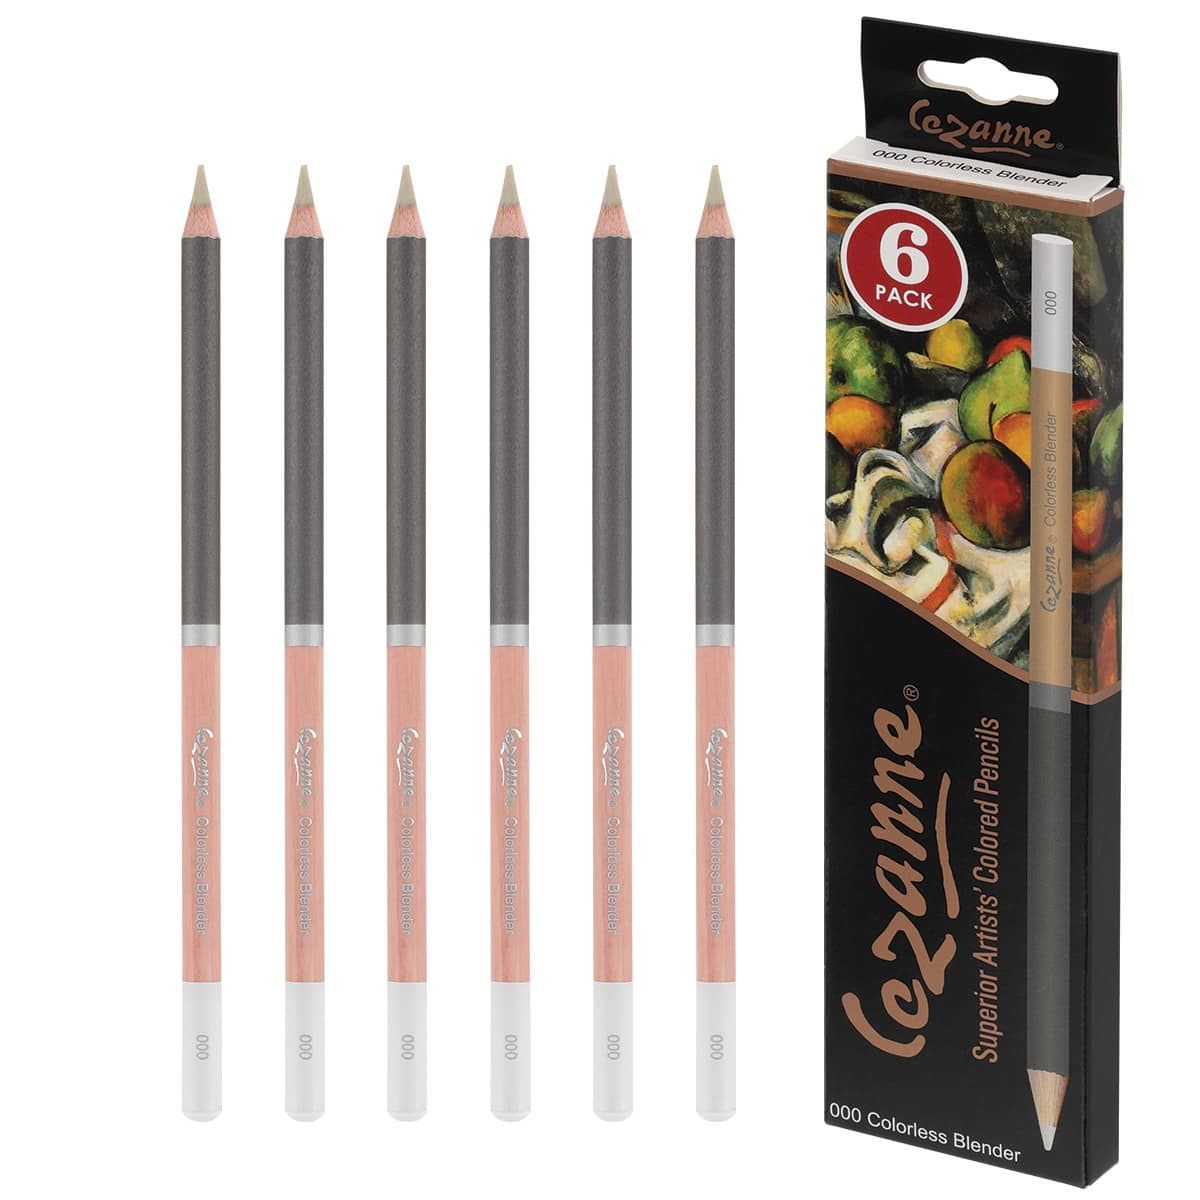 Cezanne Premium Colored Pencil Colorless Blender, Box of 6